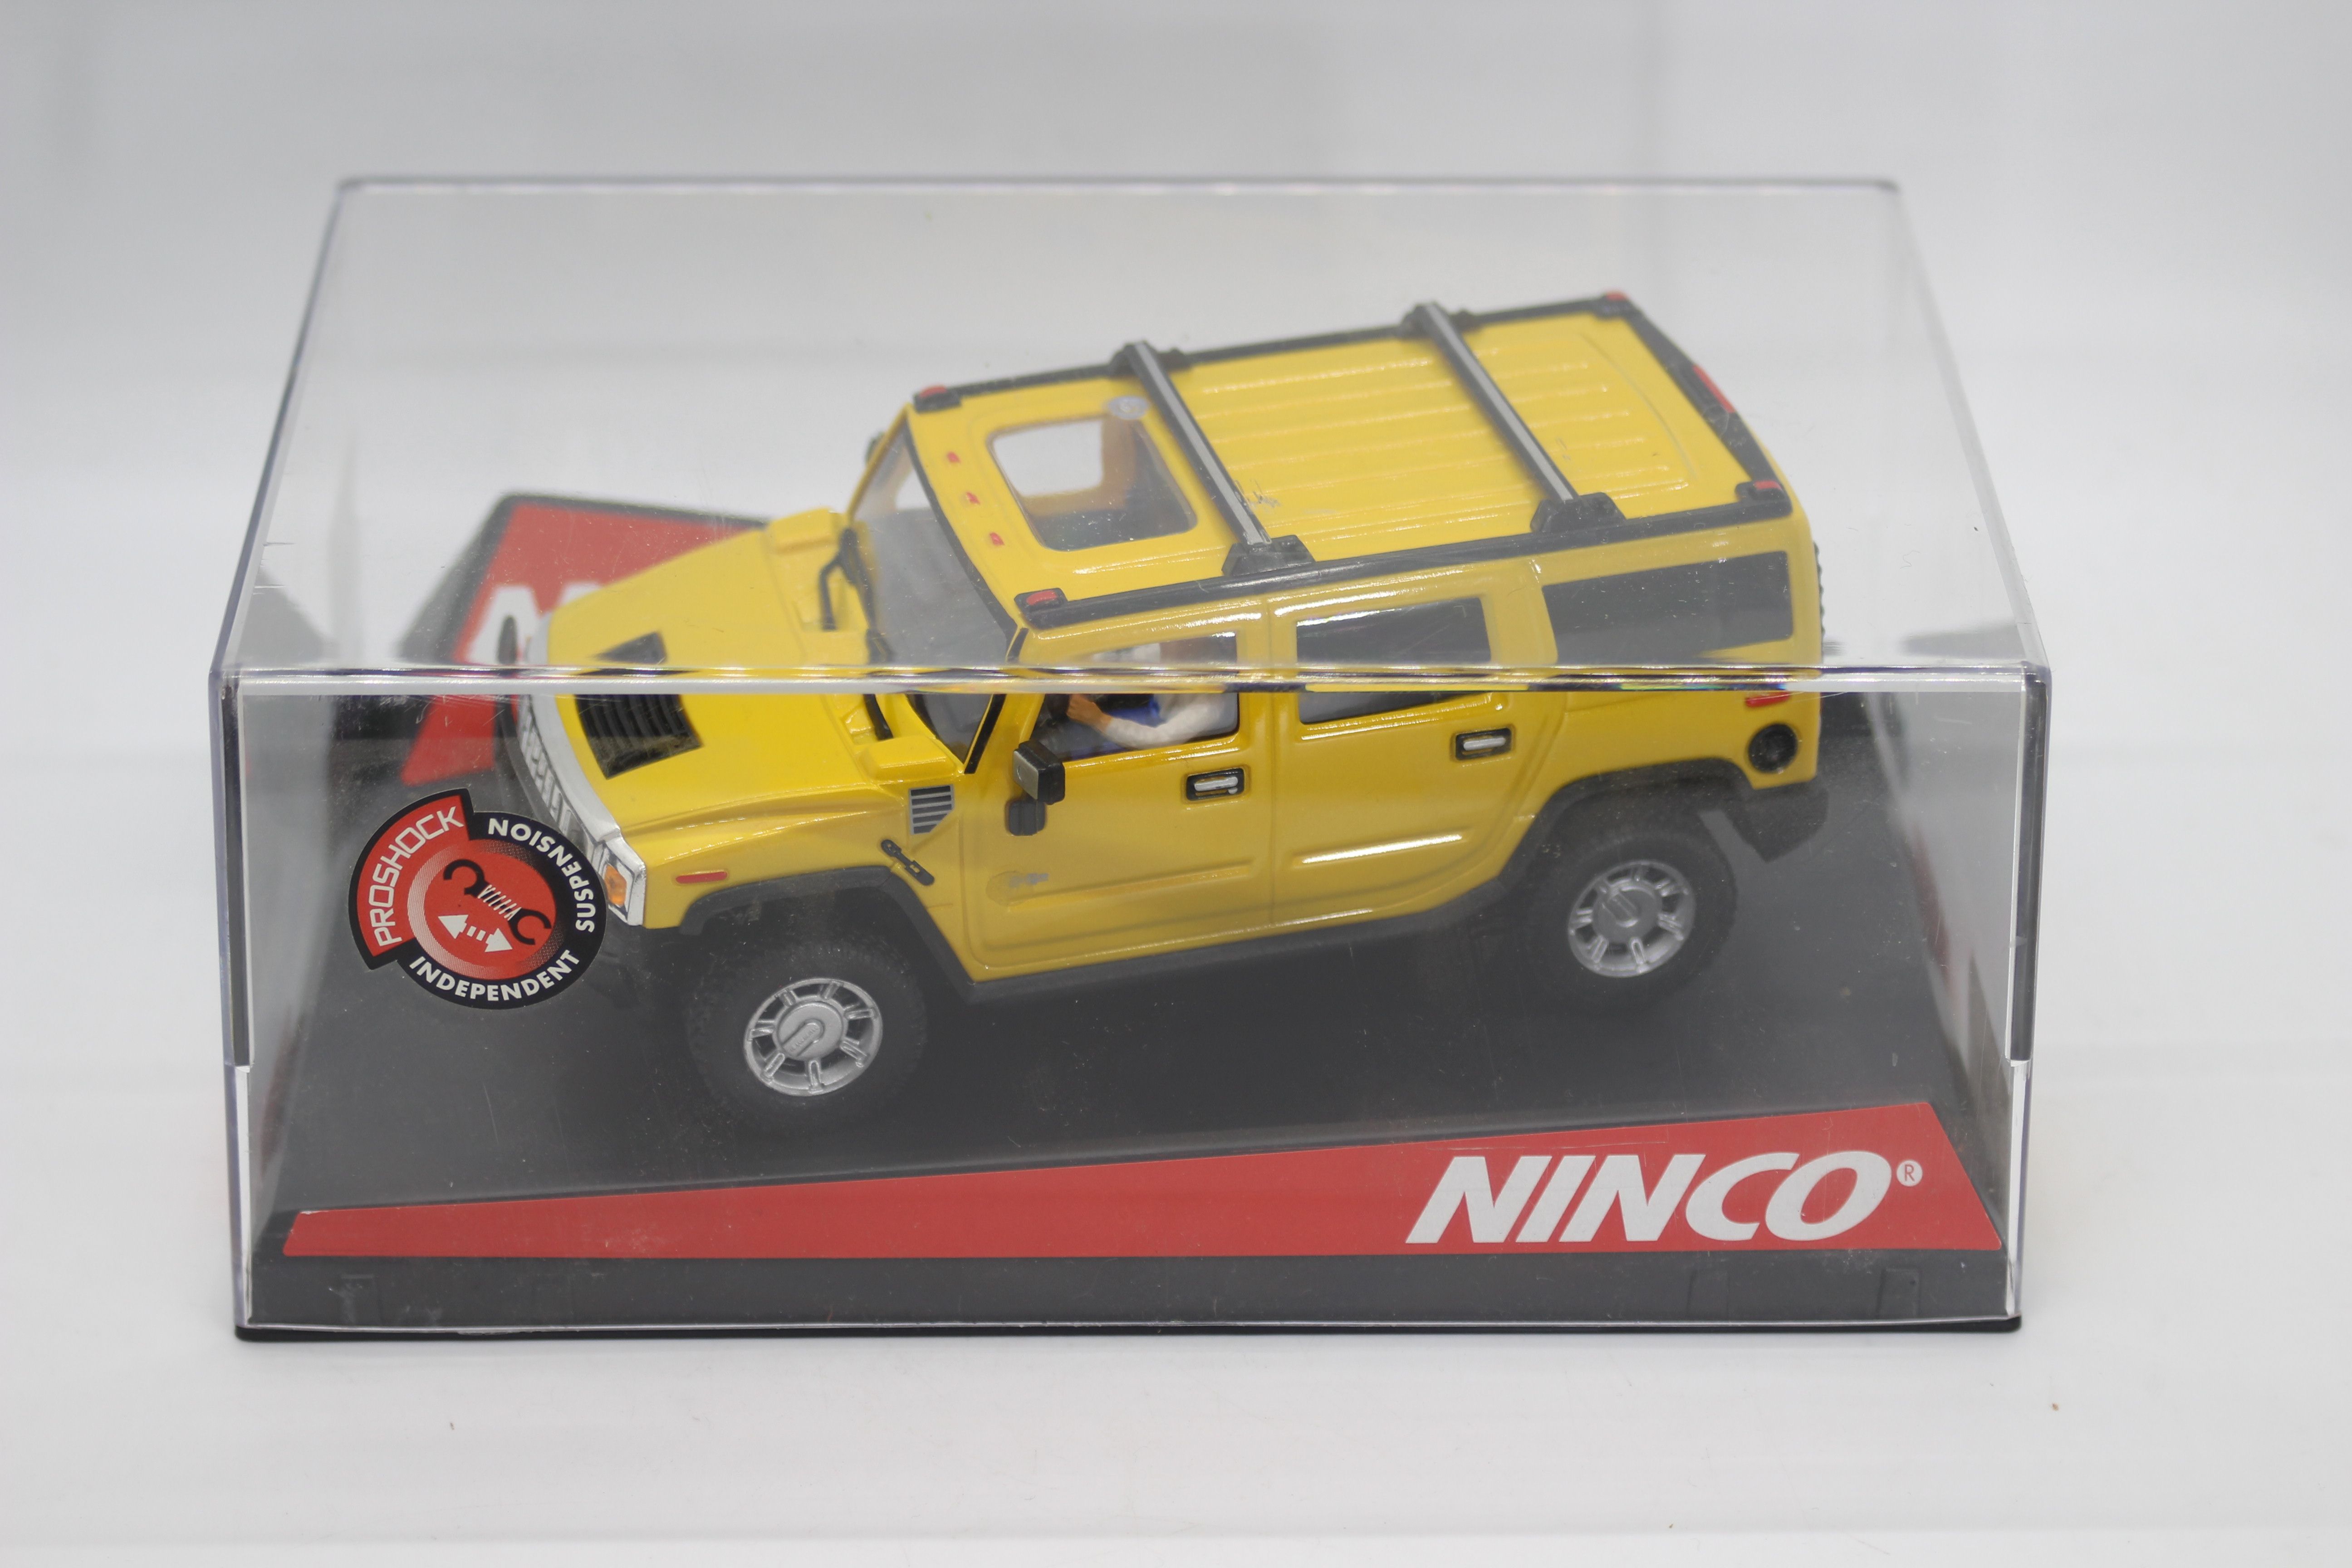 Ninco - A boxed Hummer H2 slot car in ye